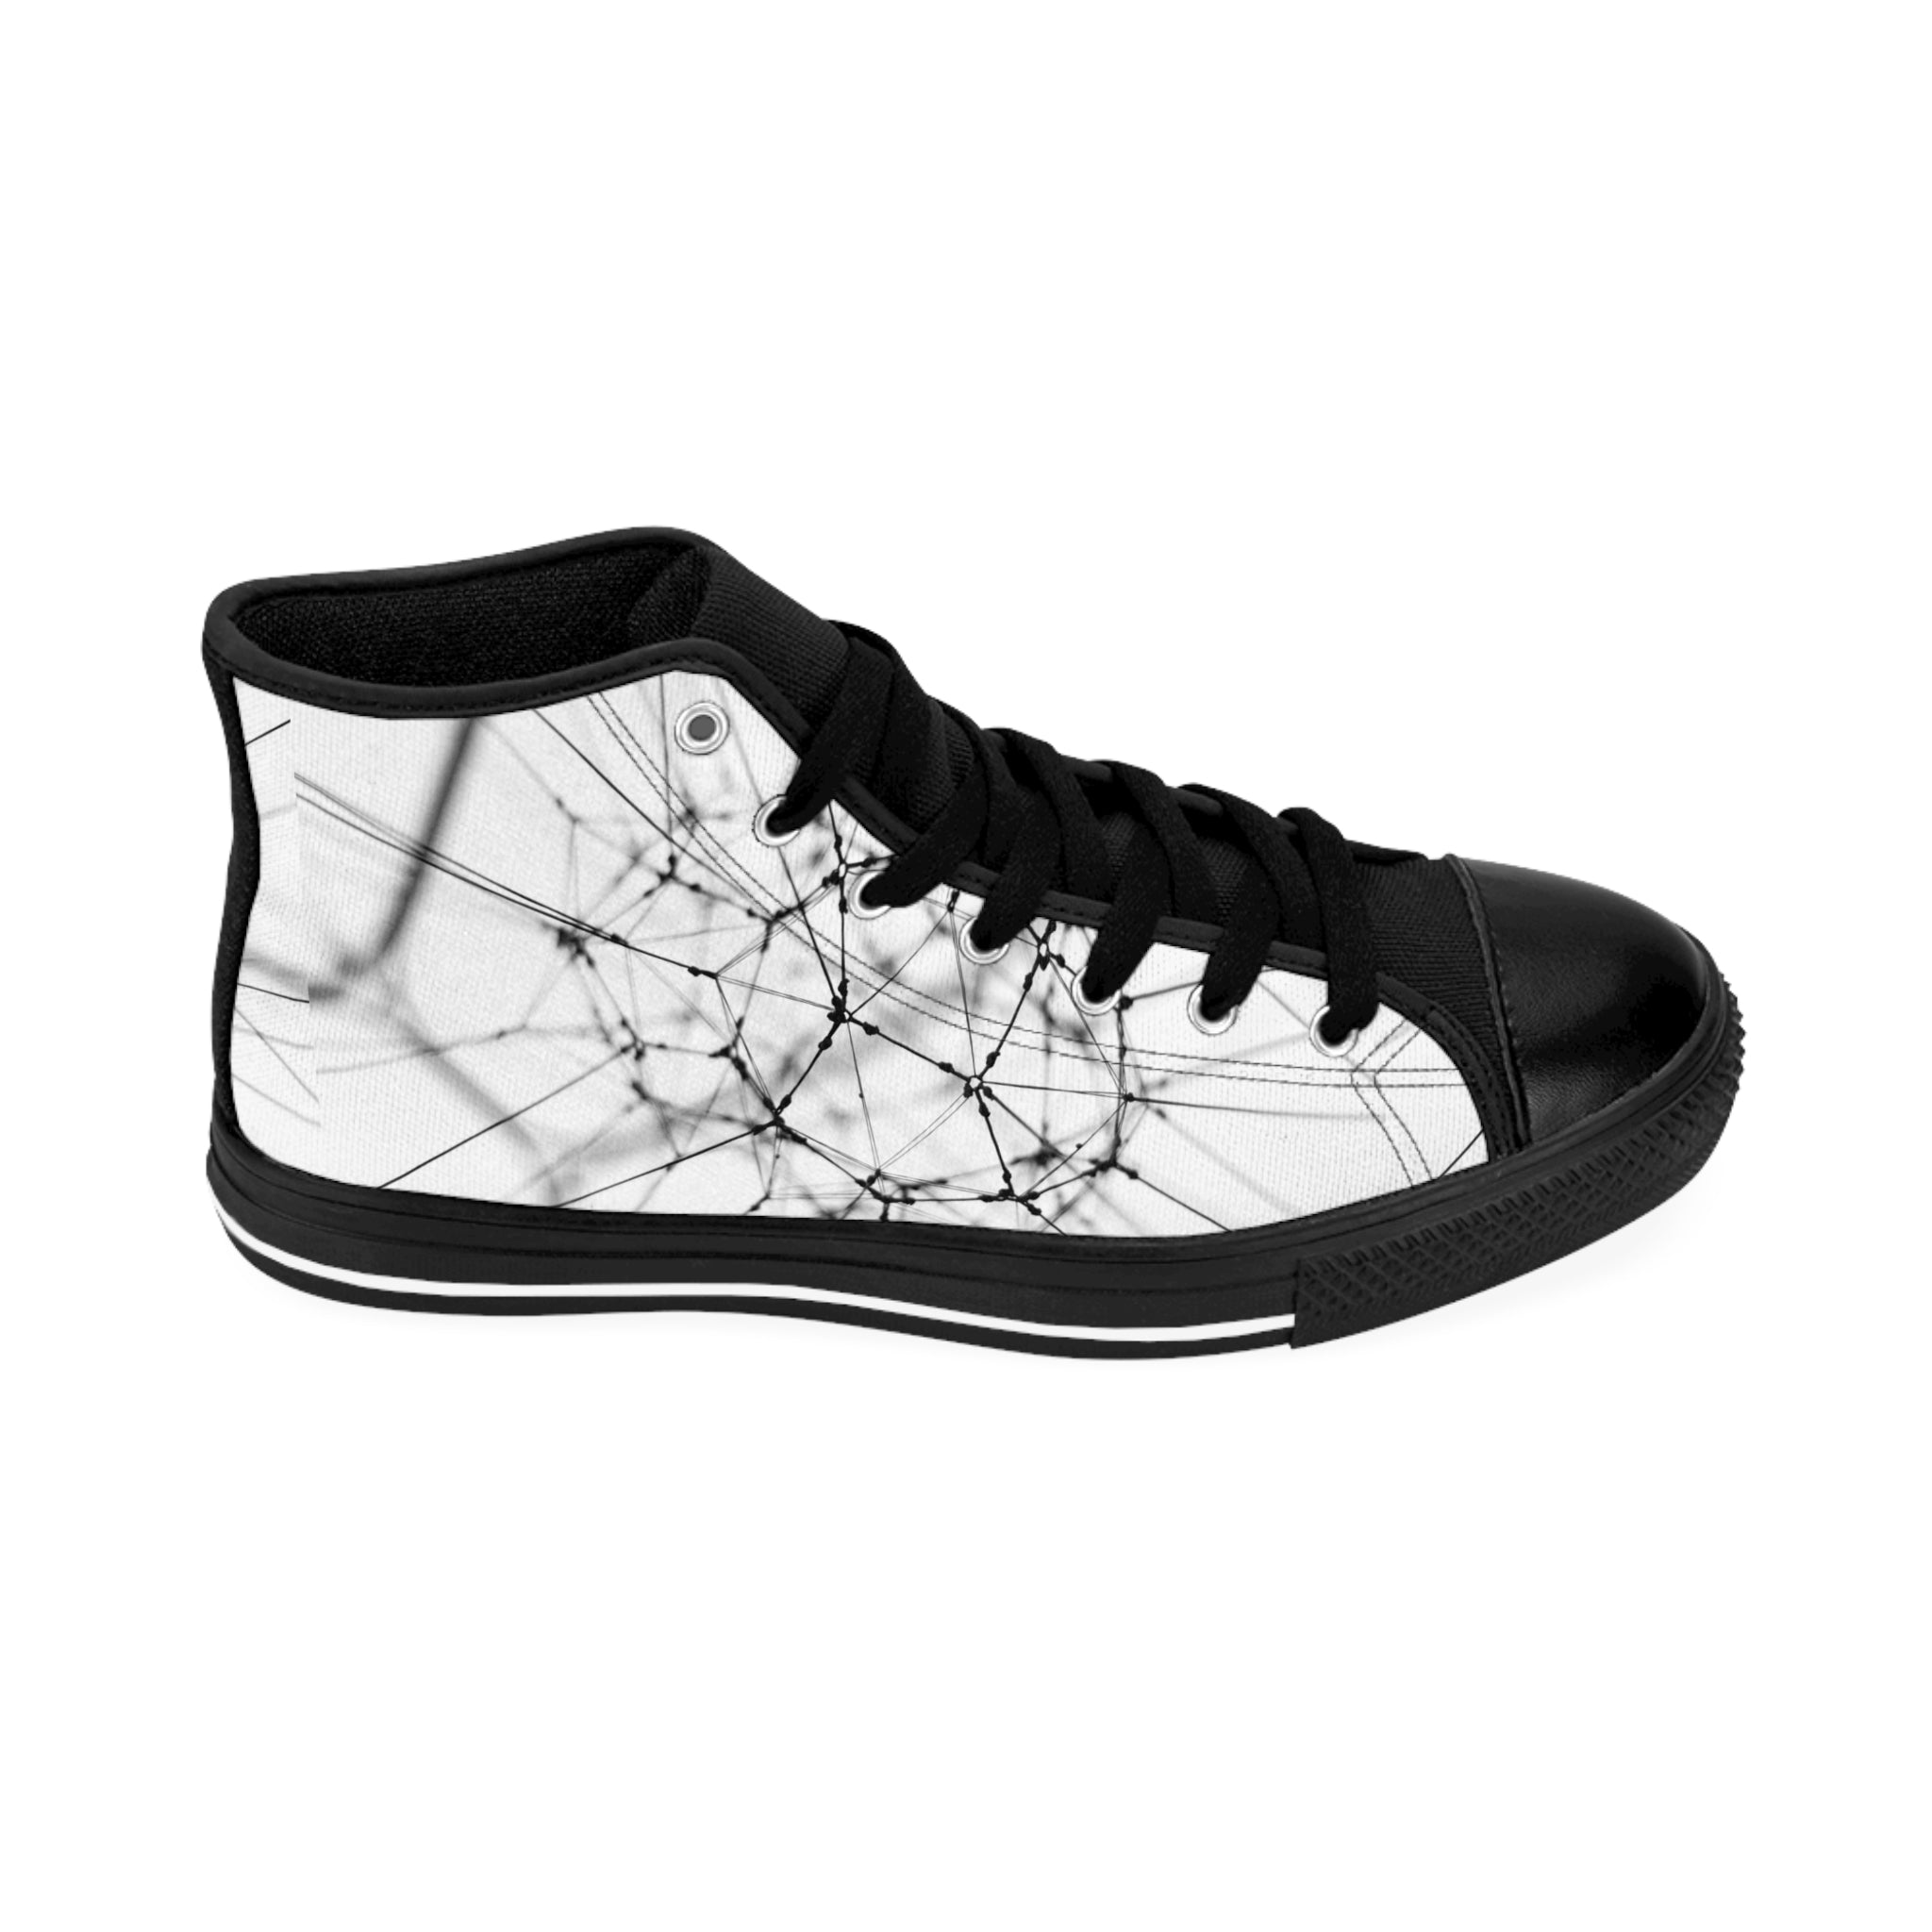 Spider Cold Men's Classic Sneakers - SportsGO